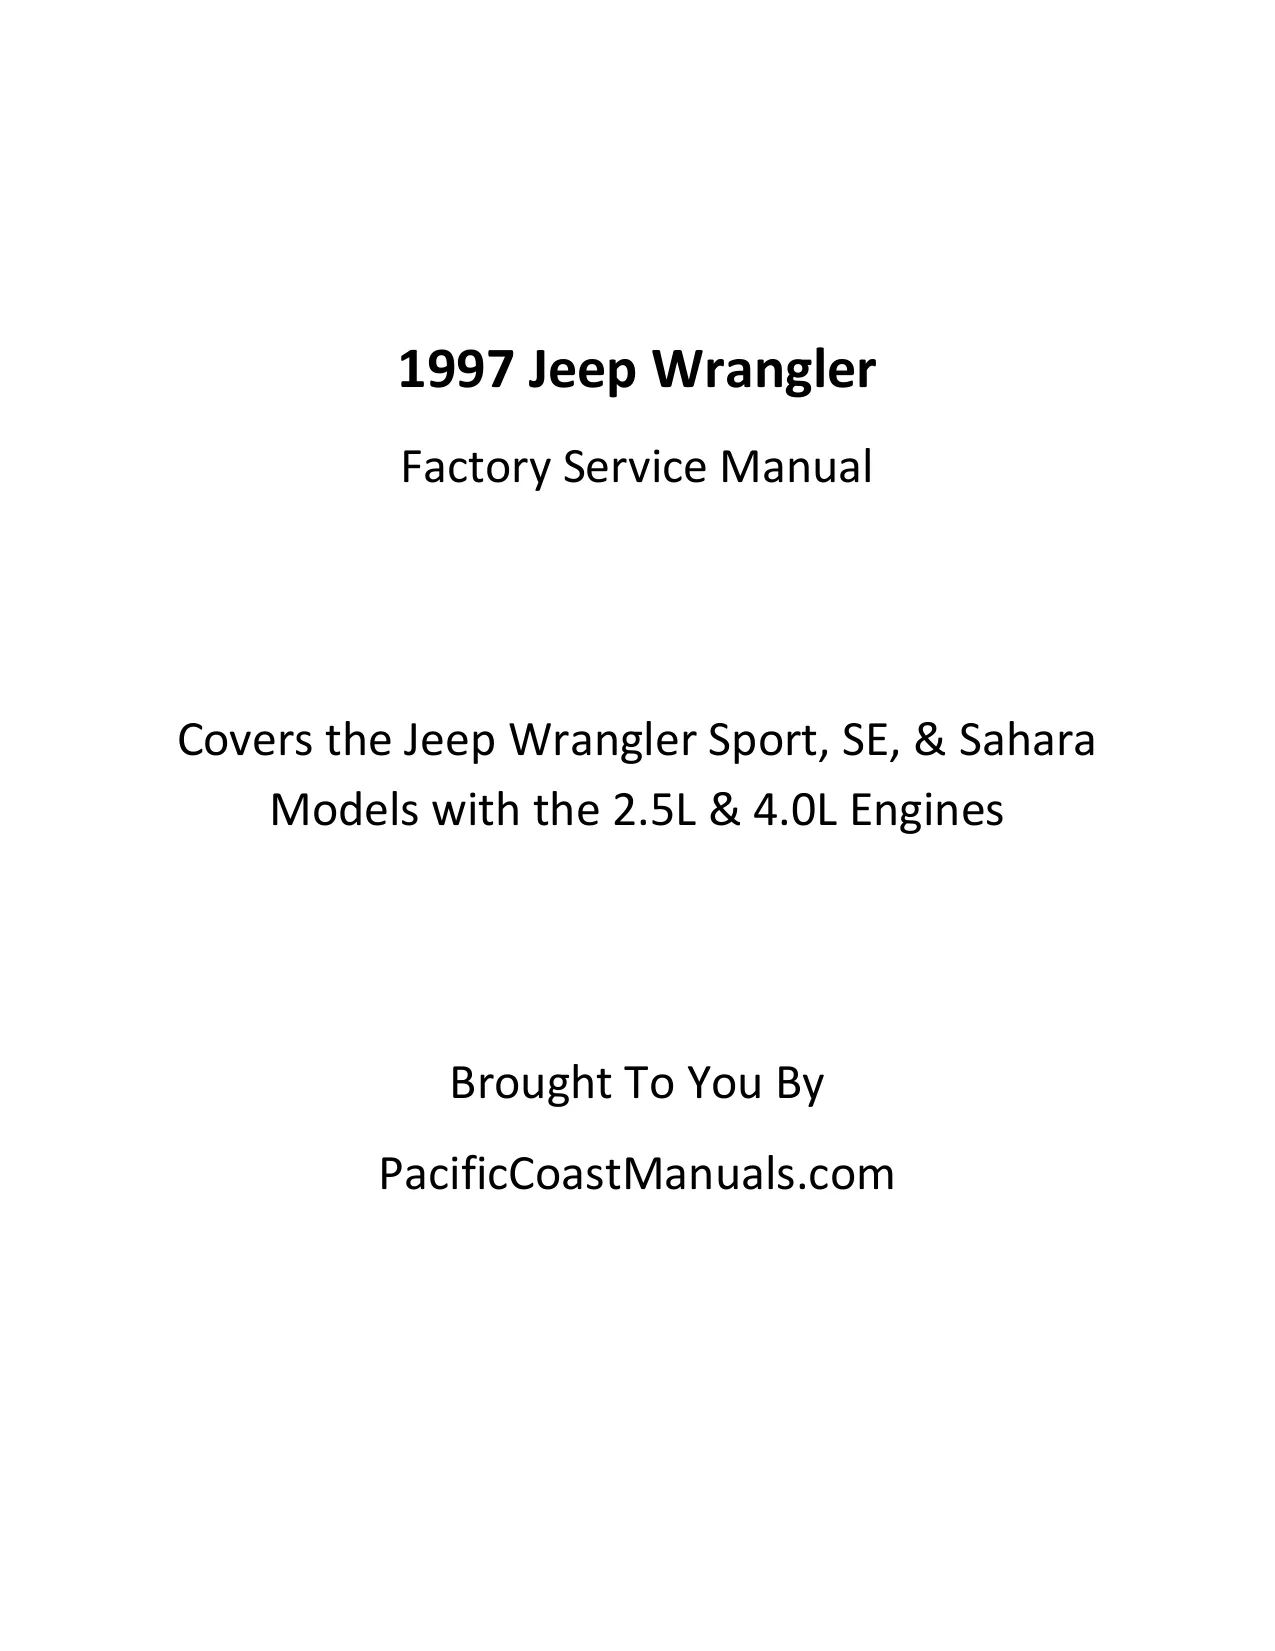 1997 Jeep Wrangler TJ shop manual